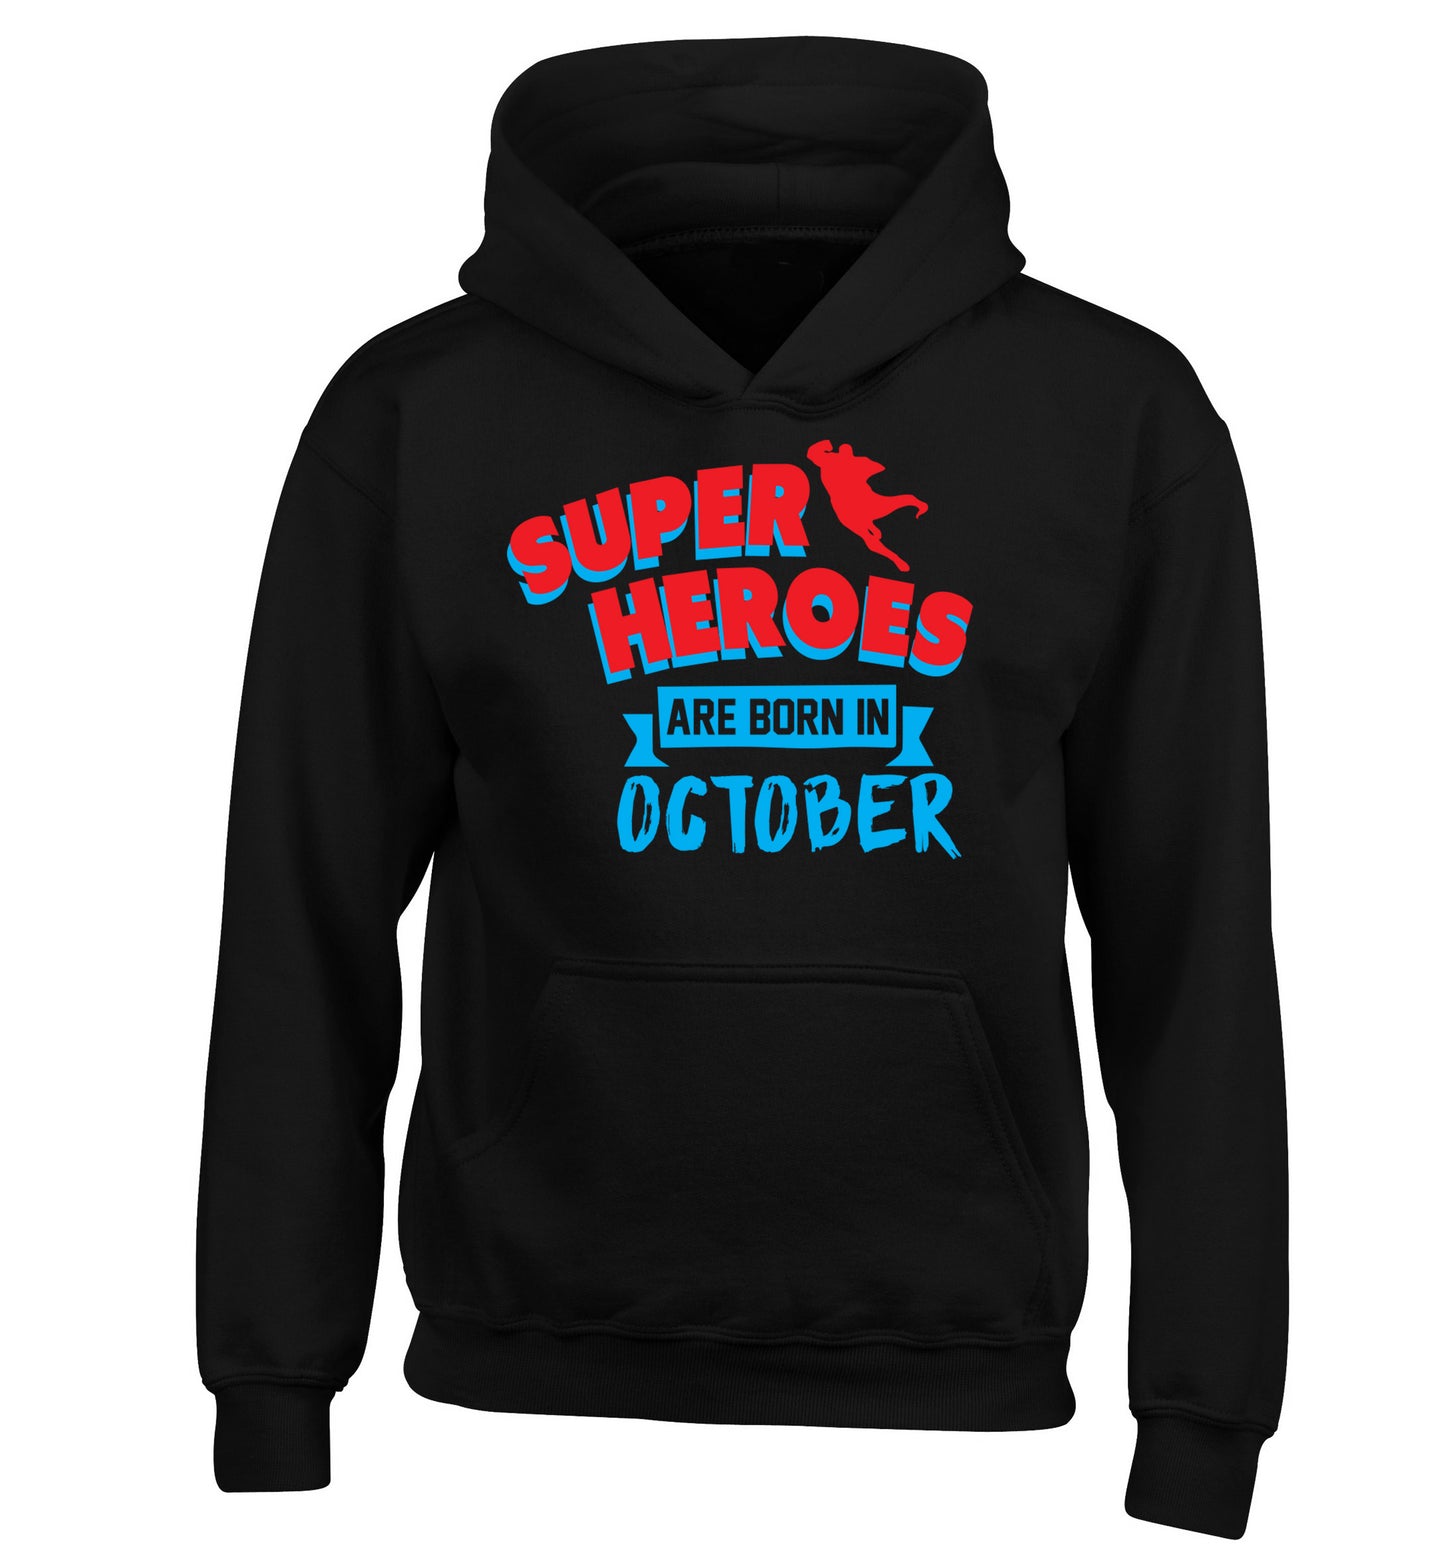 Superheroes are born in October children's black hoodie 12-13 Years